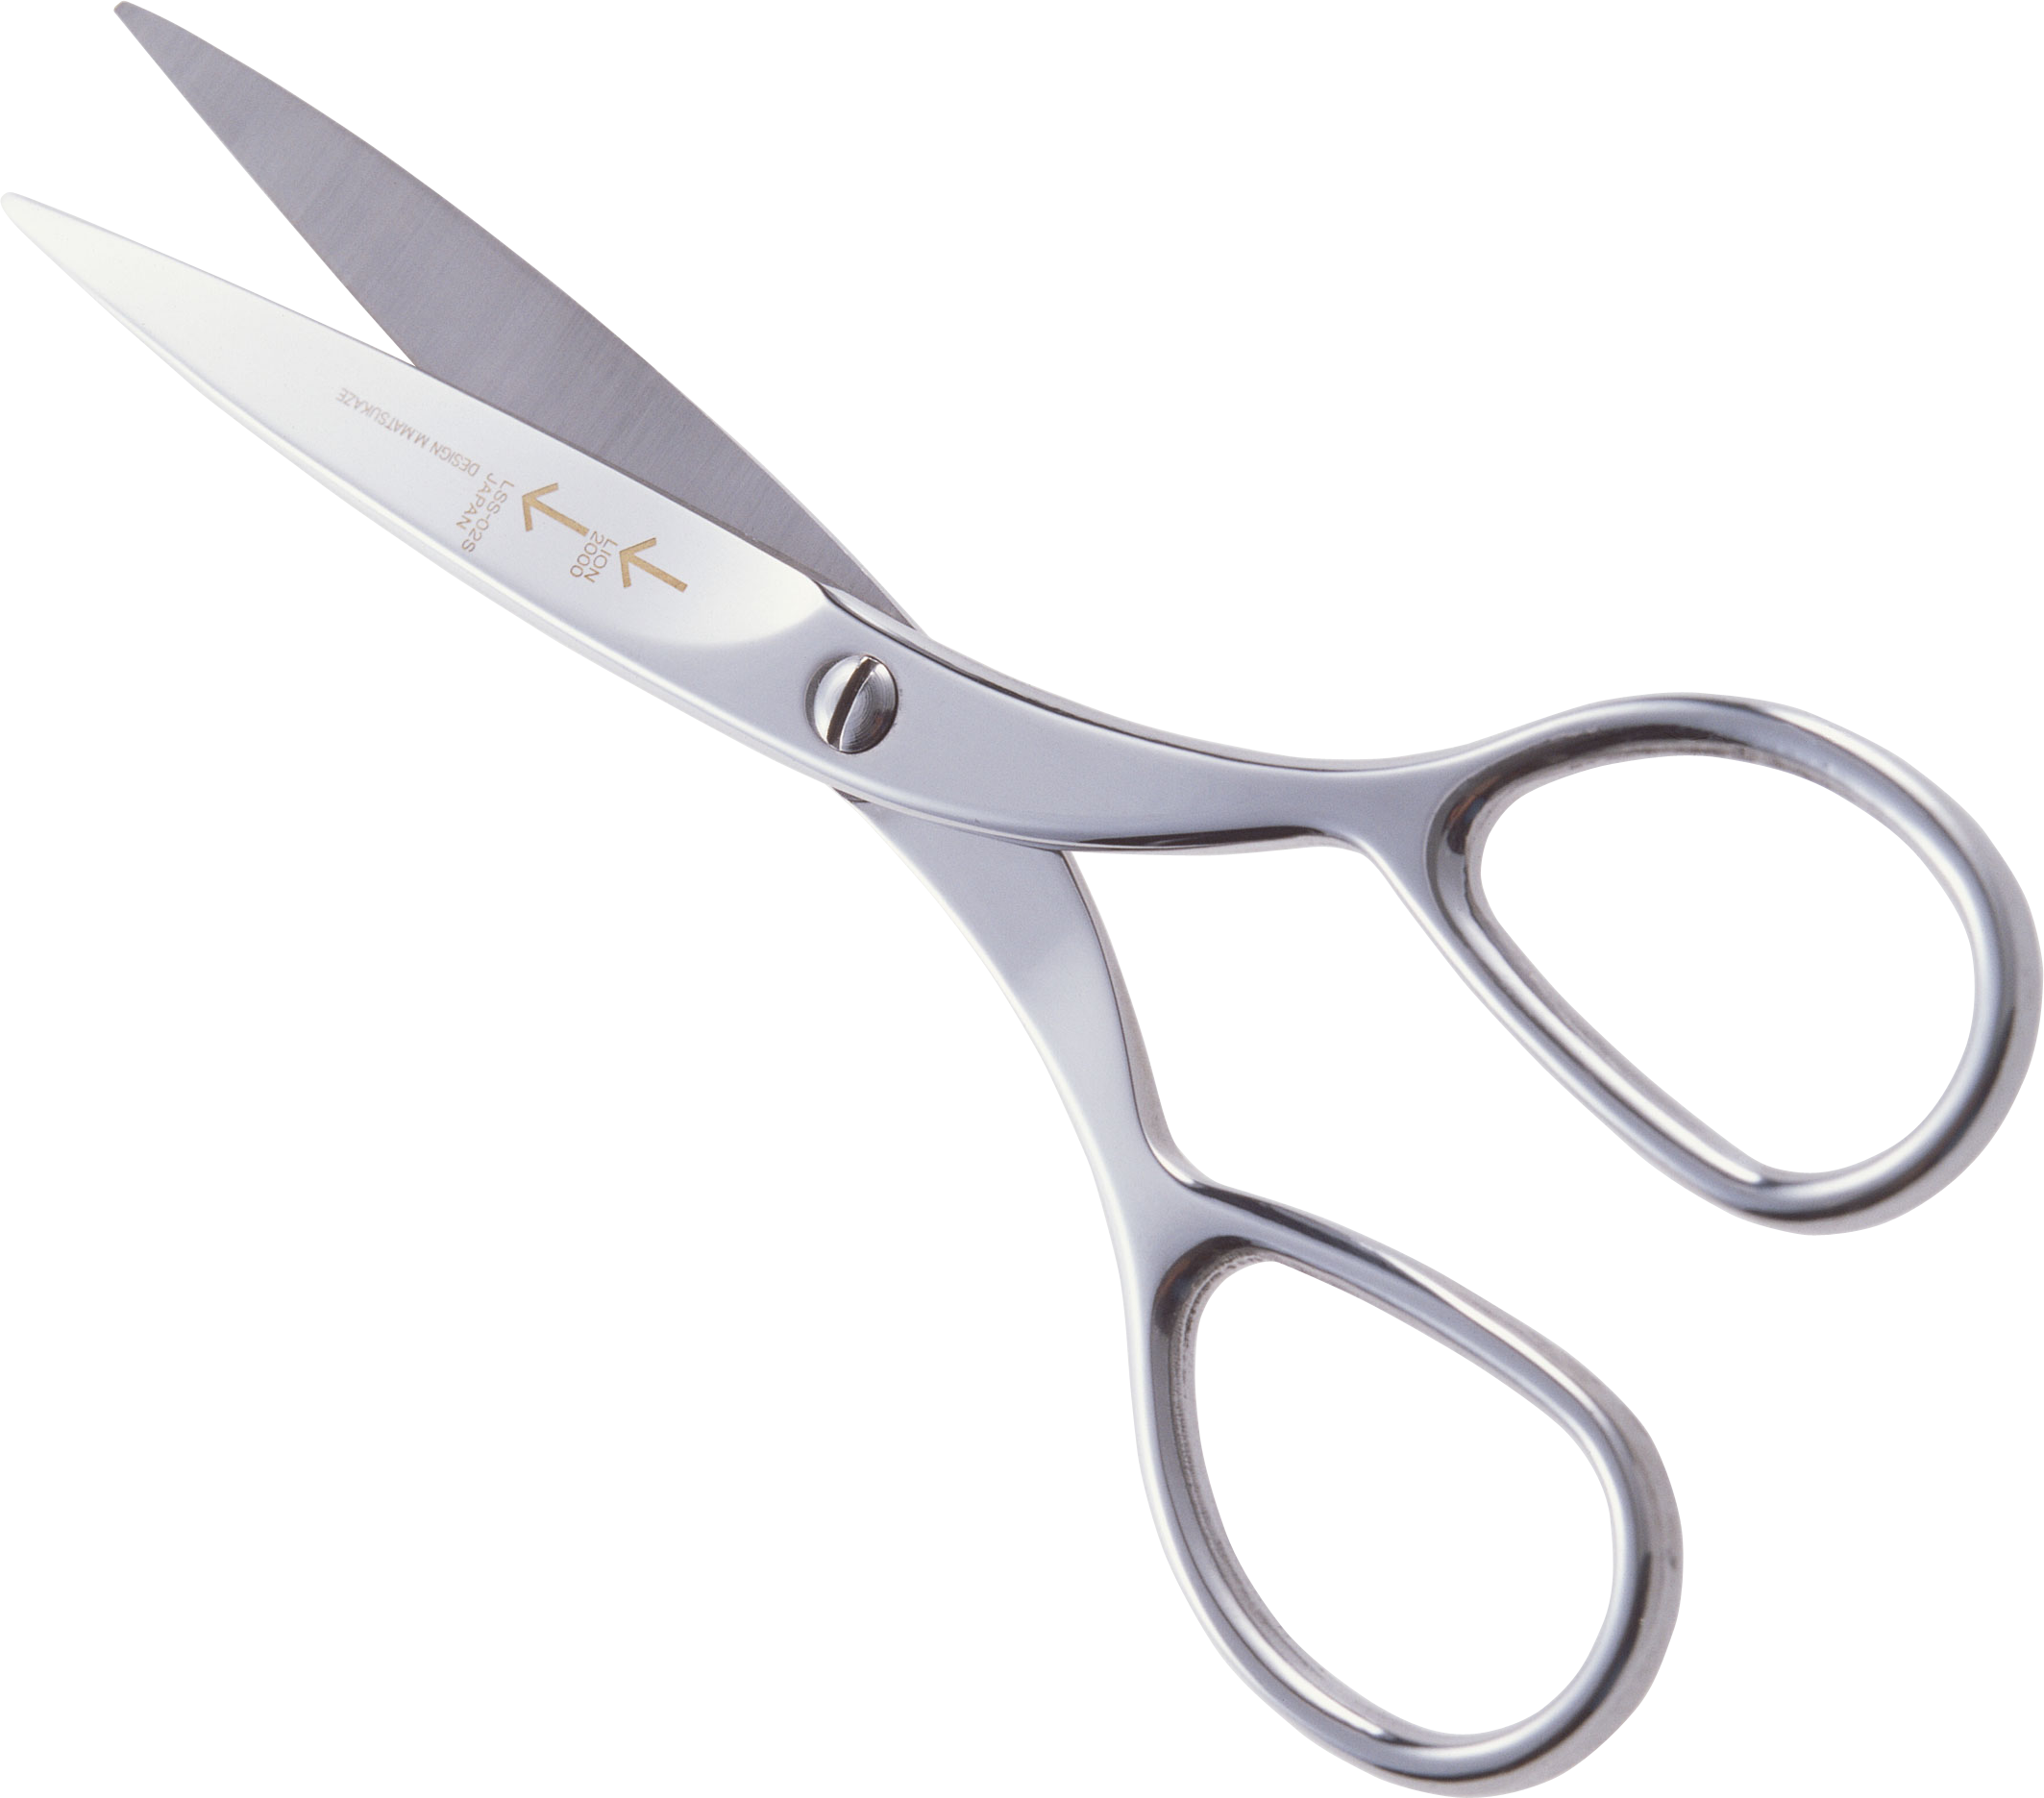 Coupon clipart scissors. Hair png image pinterest